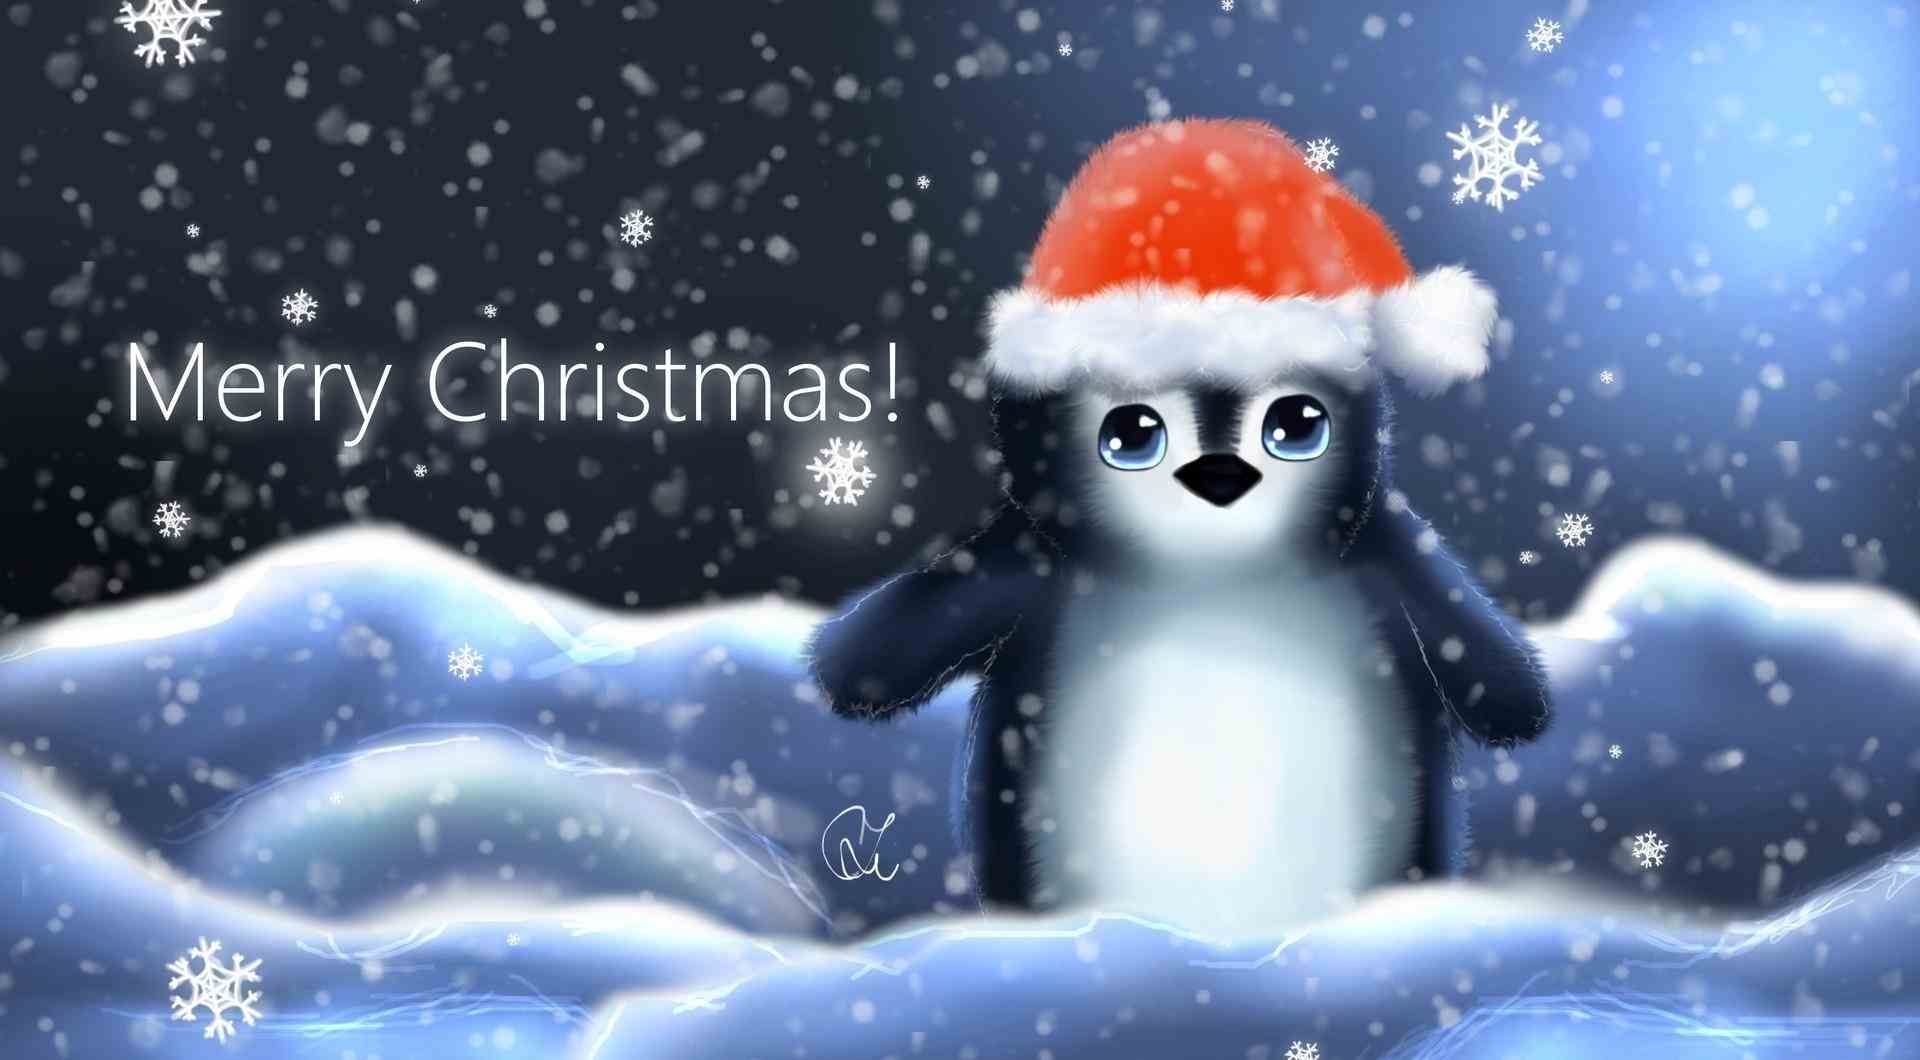 Merry Christmas Penguin. Merry christmas wallpaper, Cute christmas background, Christmas wallpaper